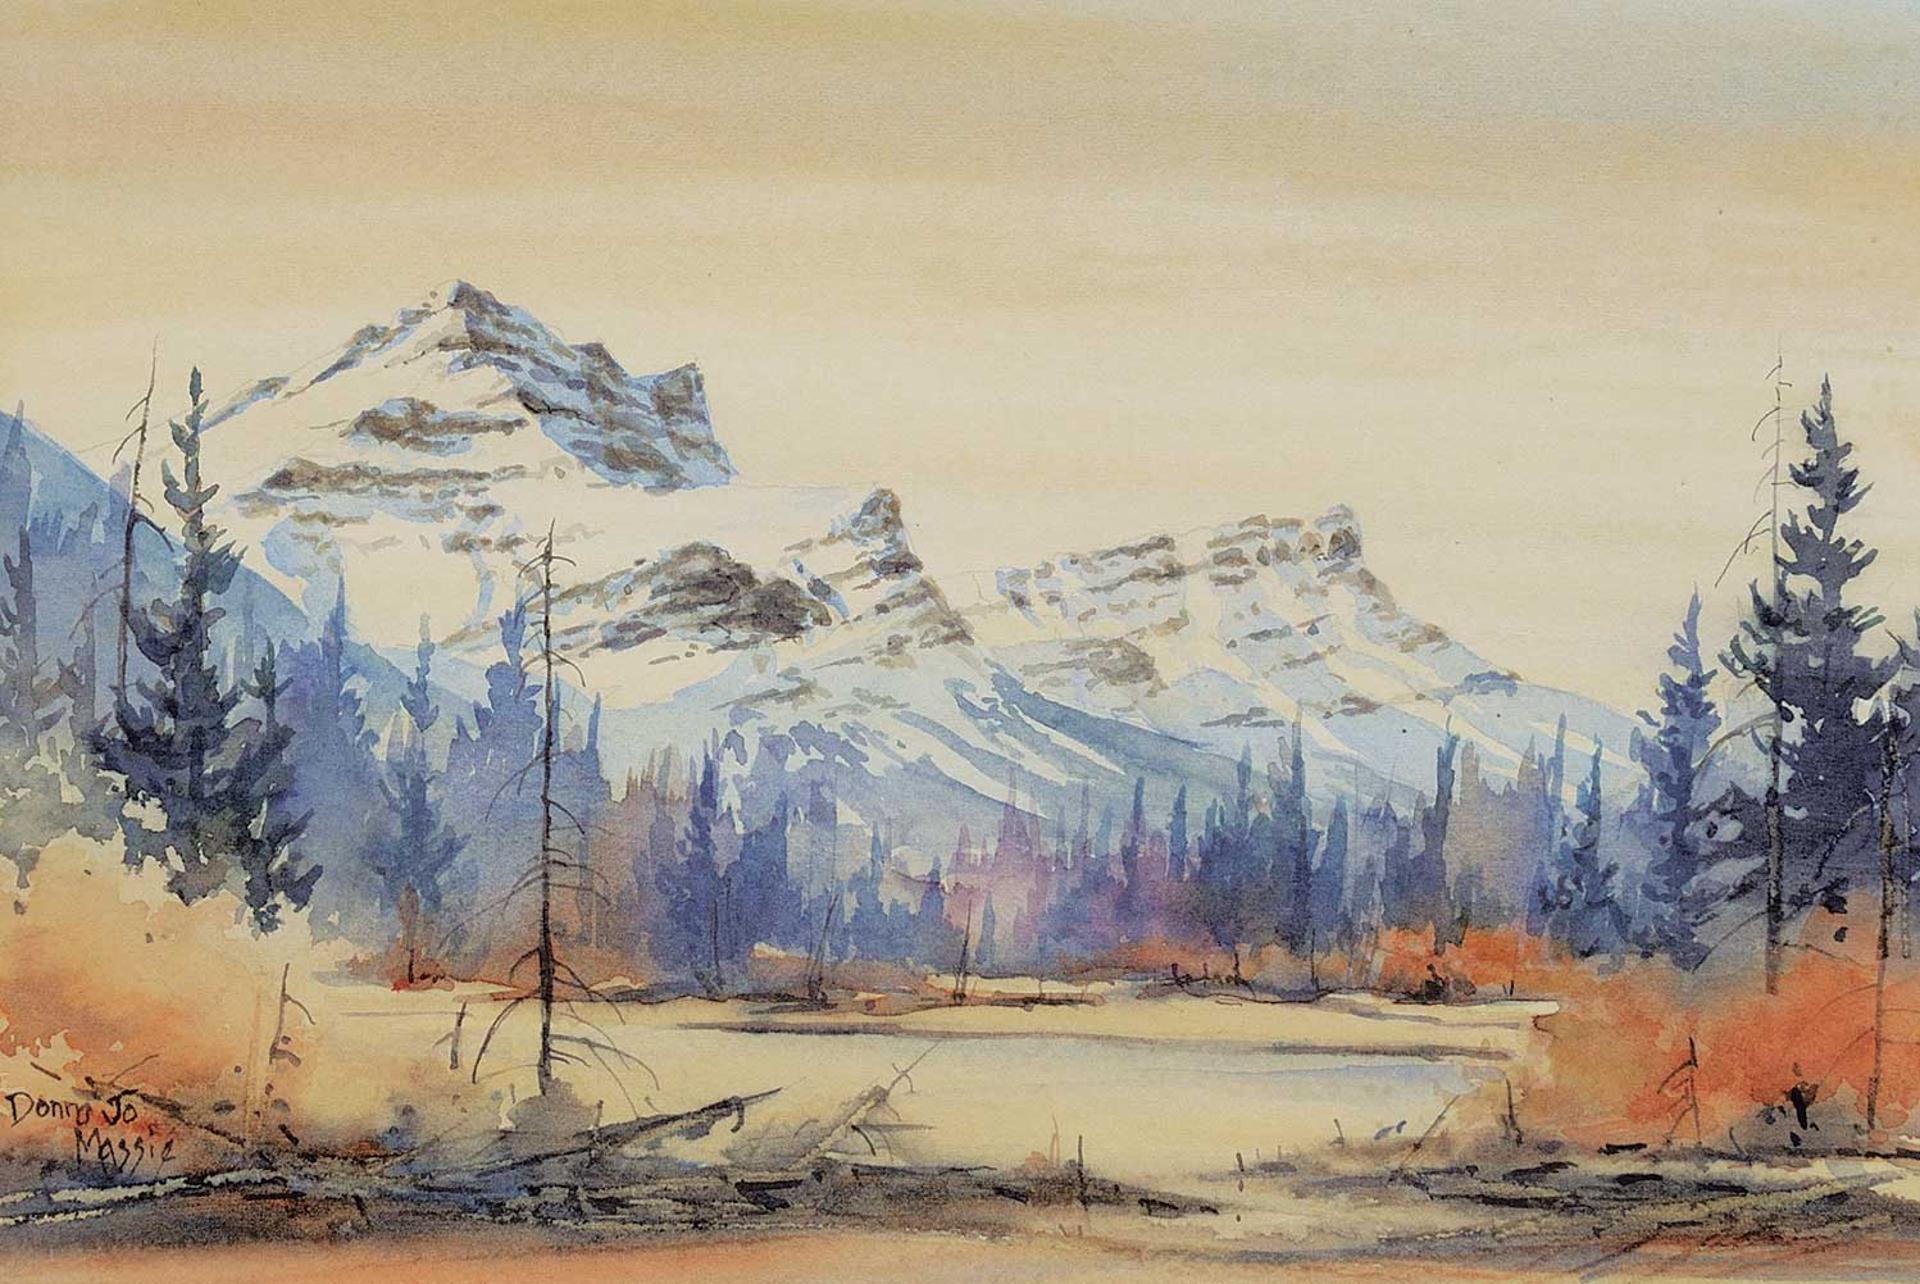 Donna Jo Massie (1948) - Mt. Rundle - Canmore